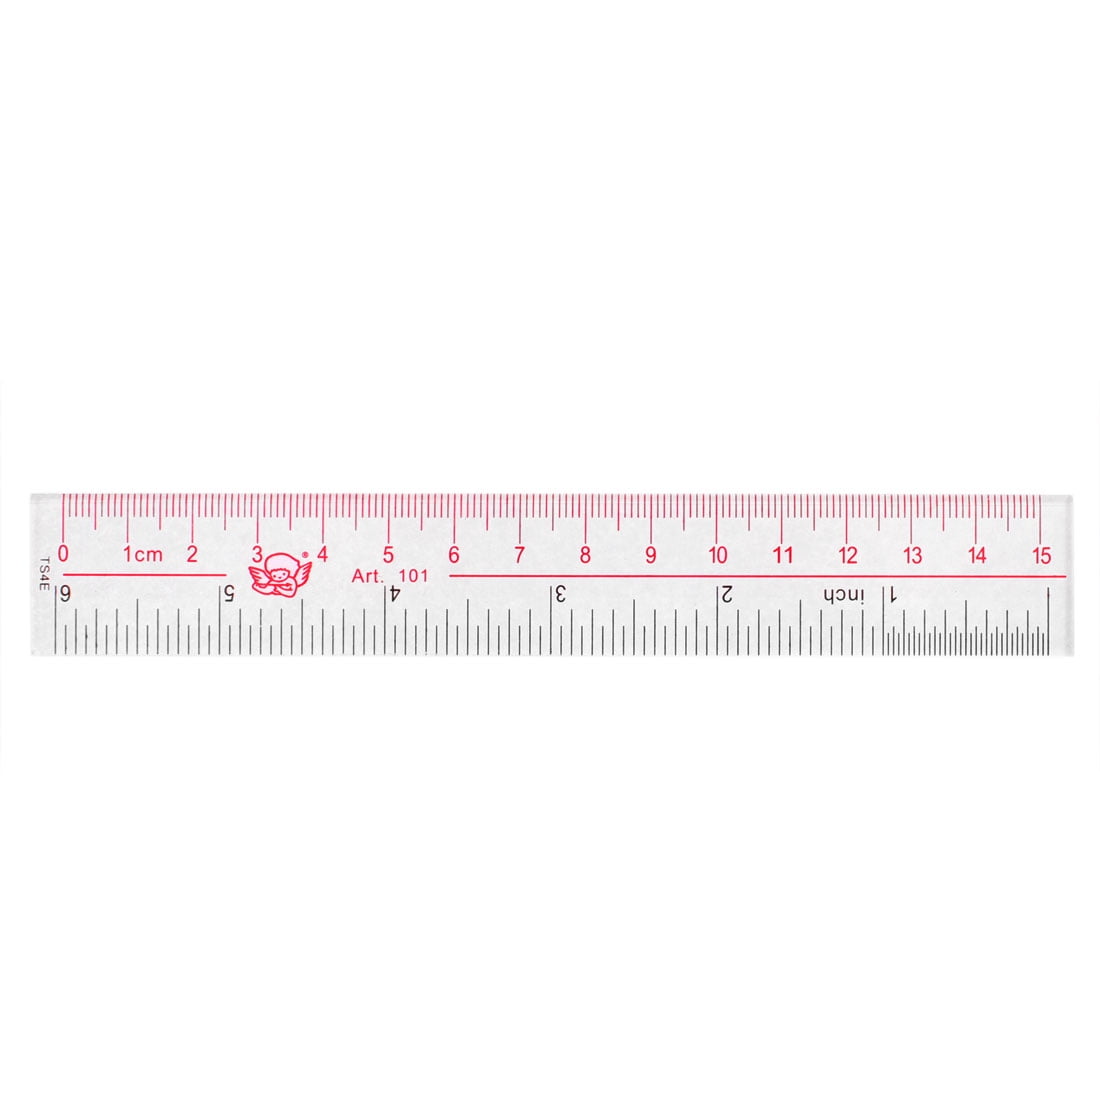 6 Inch Metal Rulers, Inches & Metric Ruler 55247 2, Compact Ruler